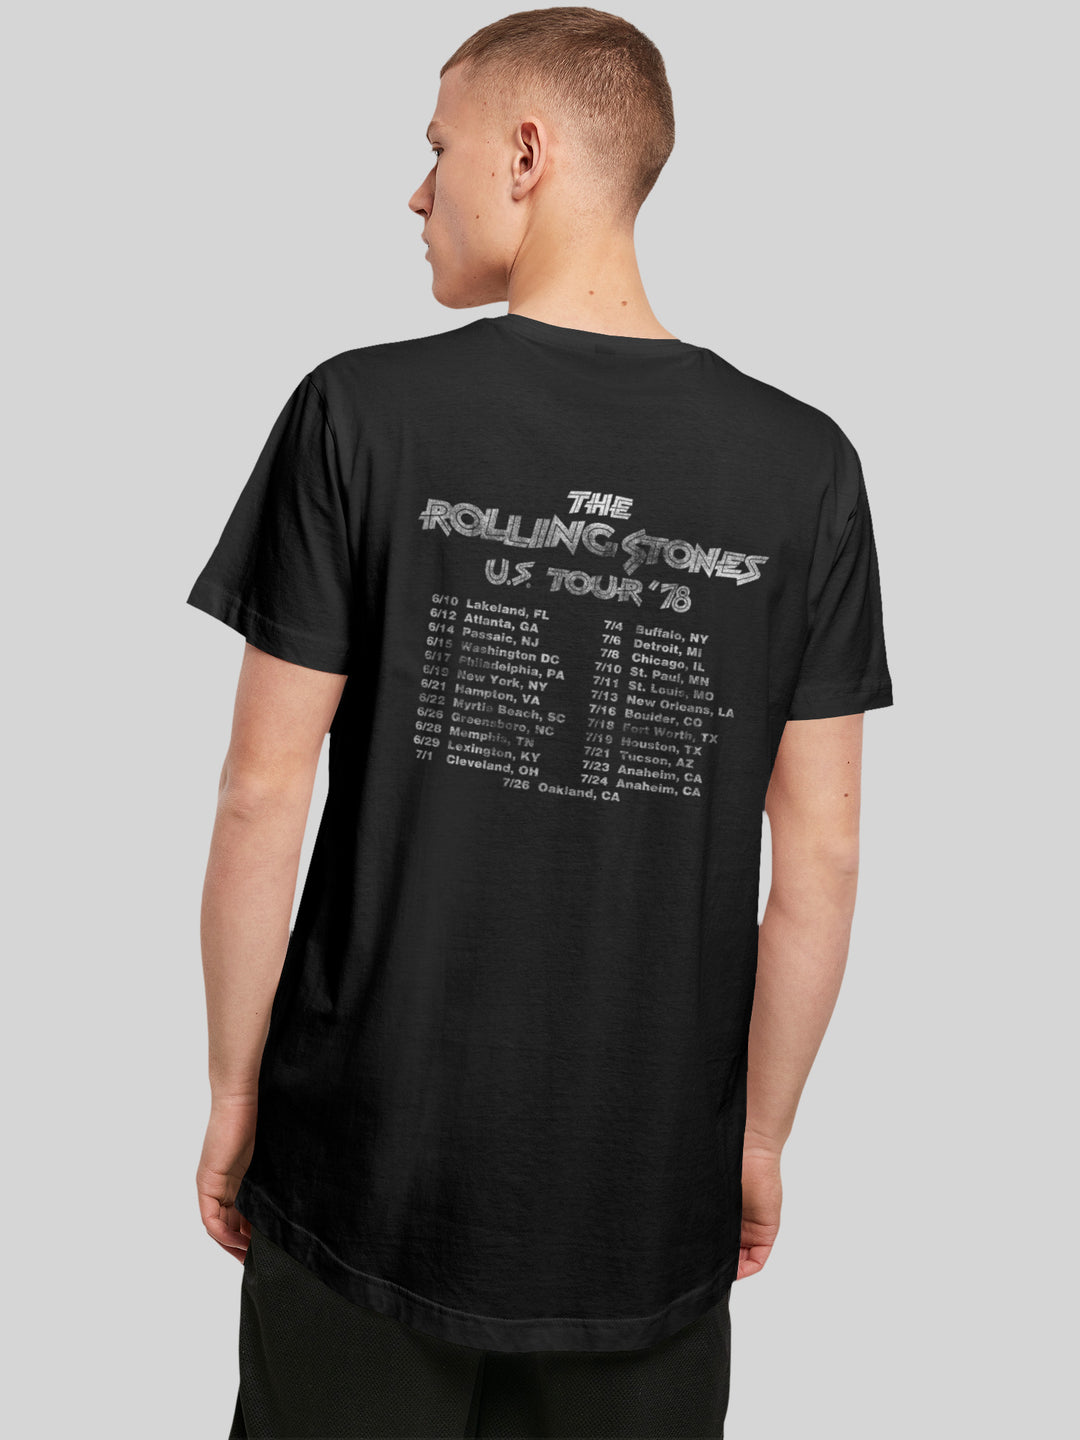 The Rolling Stones T-Shirt | US Tour '78 | Extra Long Men T Shirt